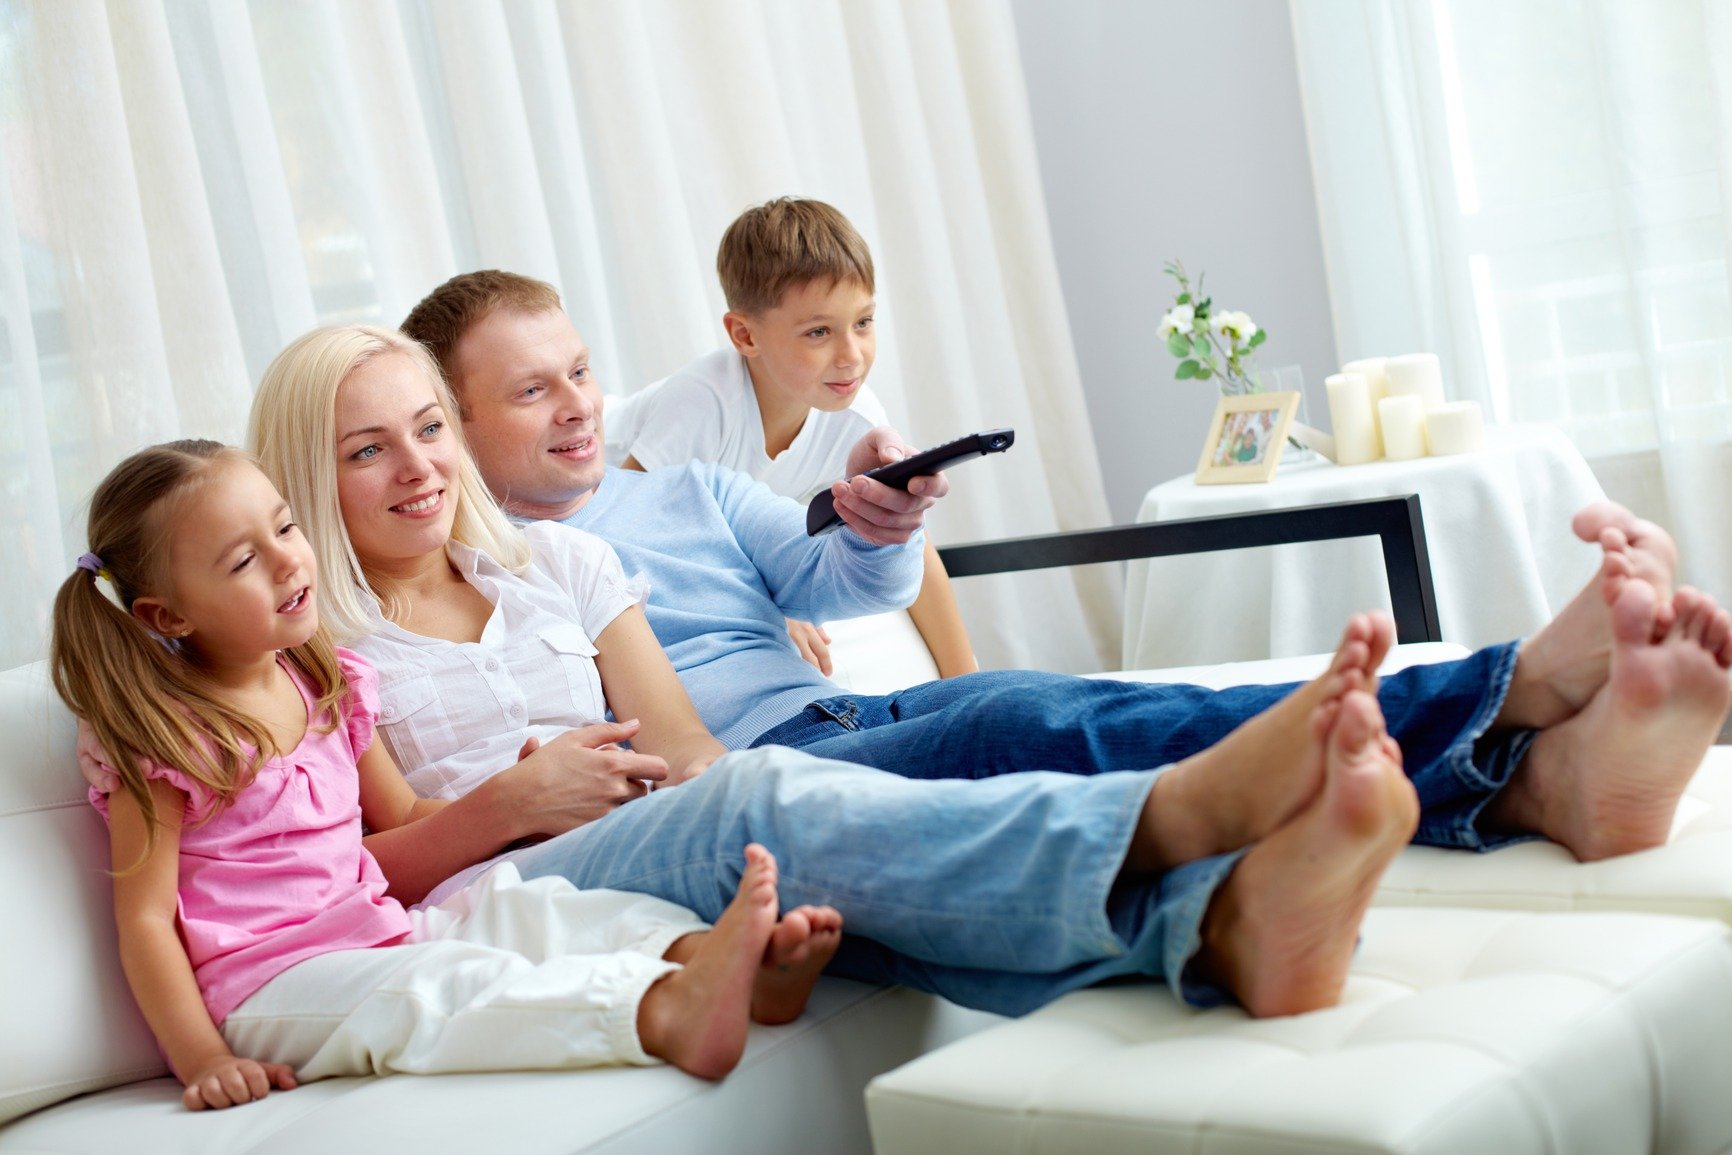 Пока родители смотрят телевизор. Семья на диване перед телевизором. Родители дети телевизор. Дети перед телевизором с родителями.